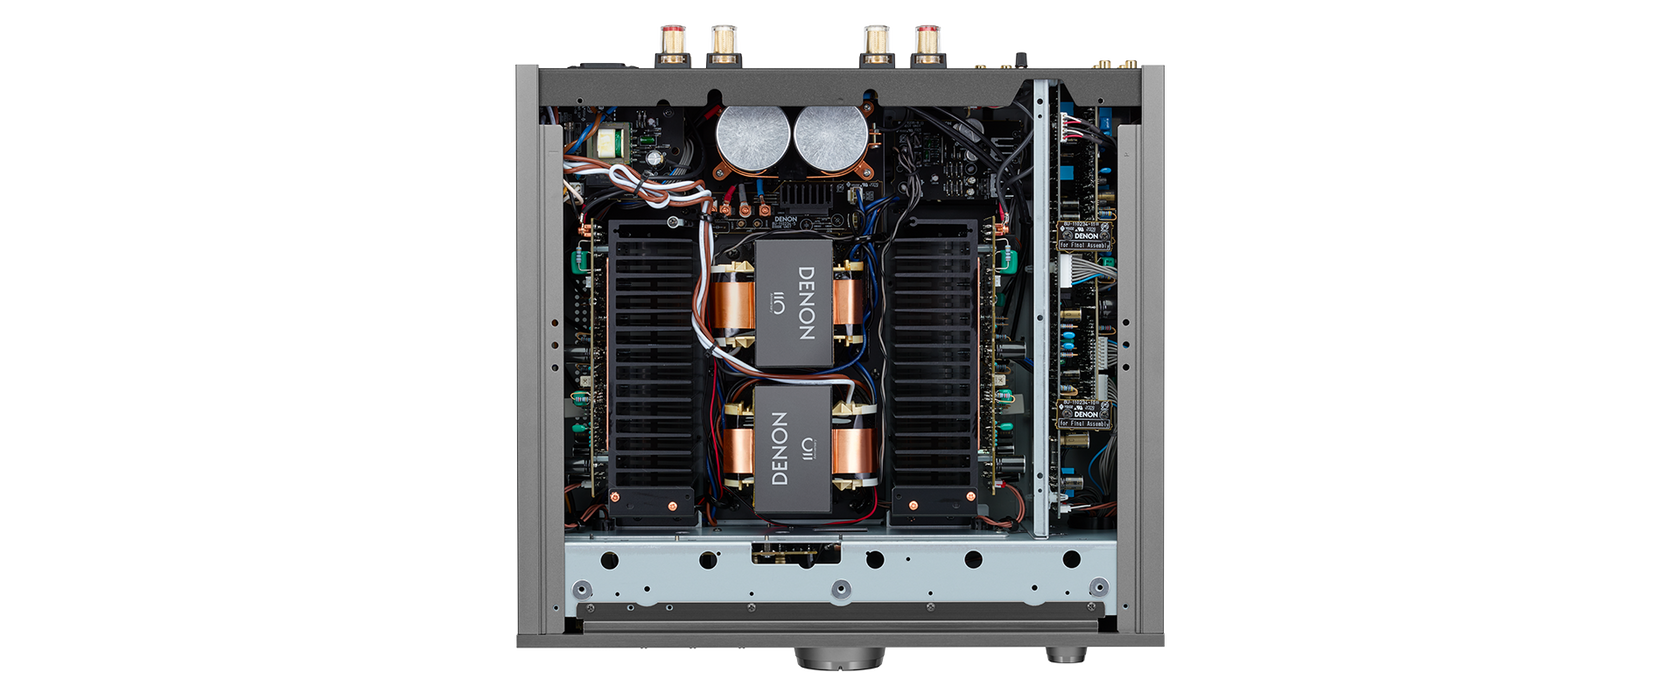 Denon PMA-A110 110-Year Anniversary Edition Integrated Amplifier Open Box - Safe and Sound HQ